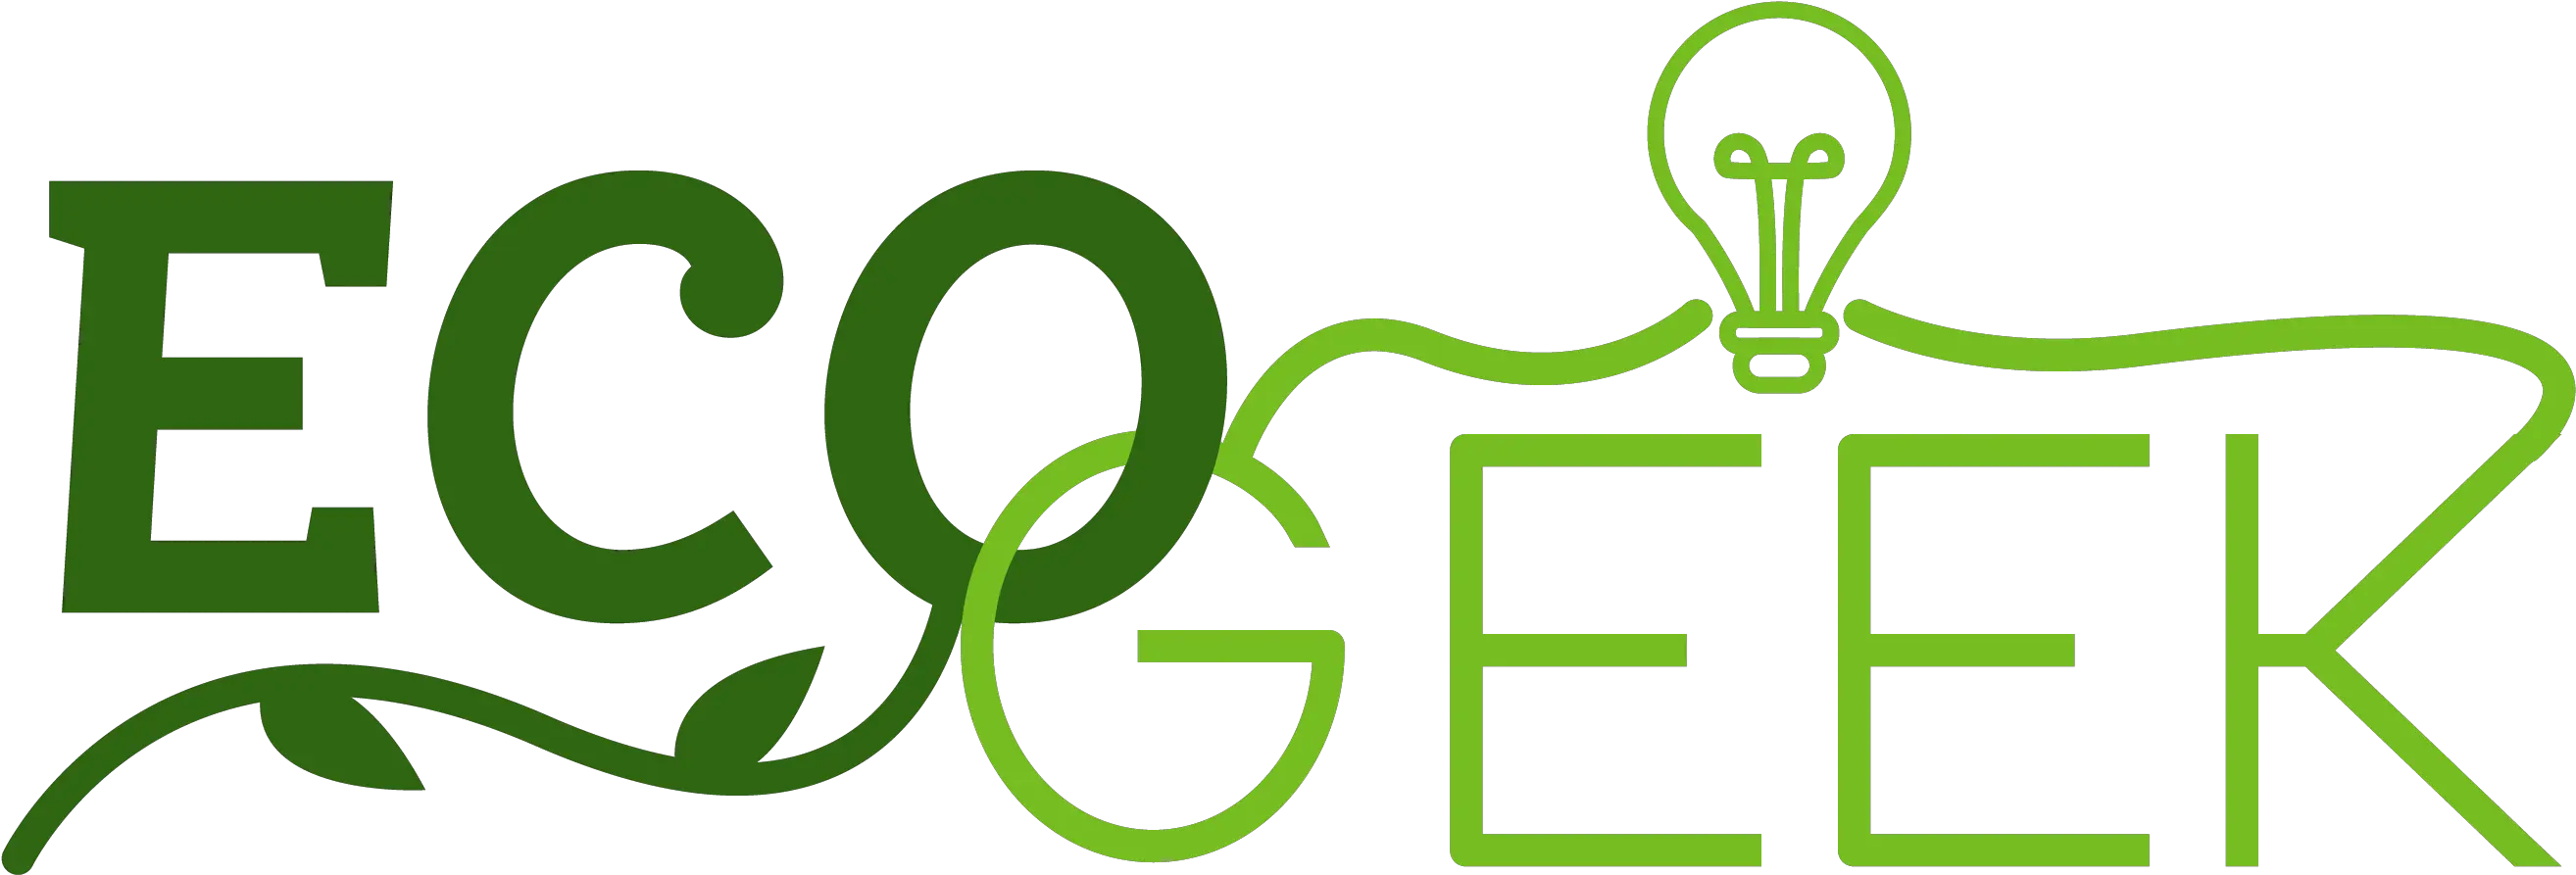 Ecogeek Clip Art Png Geek Logo